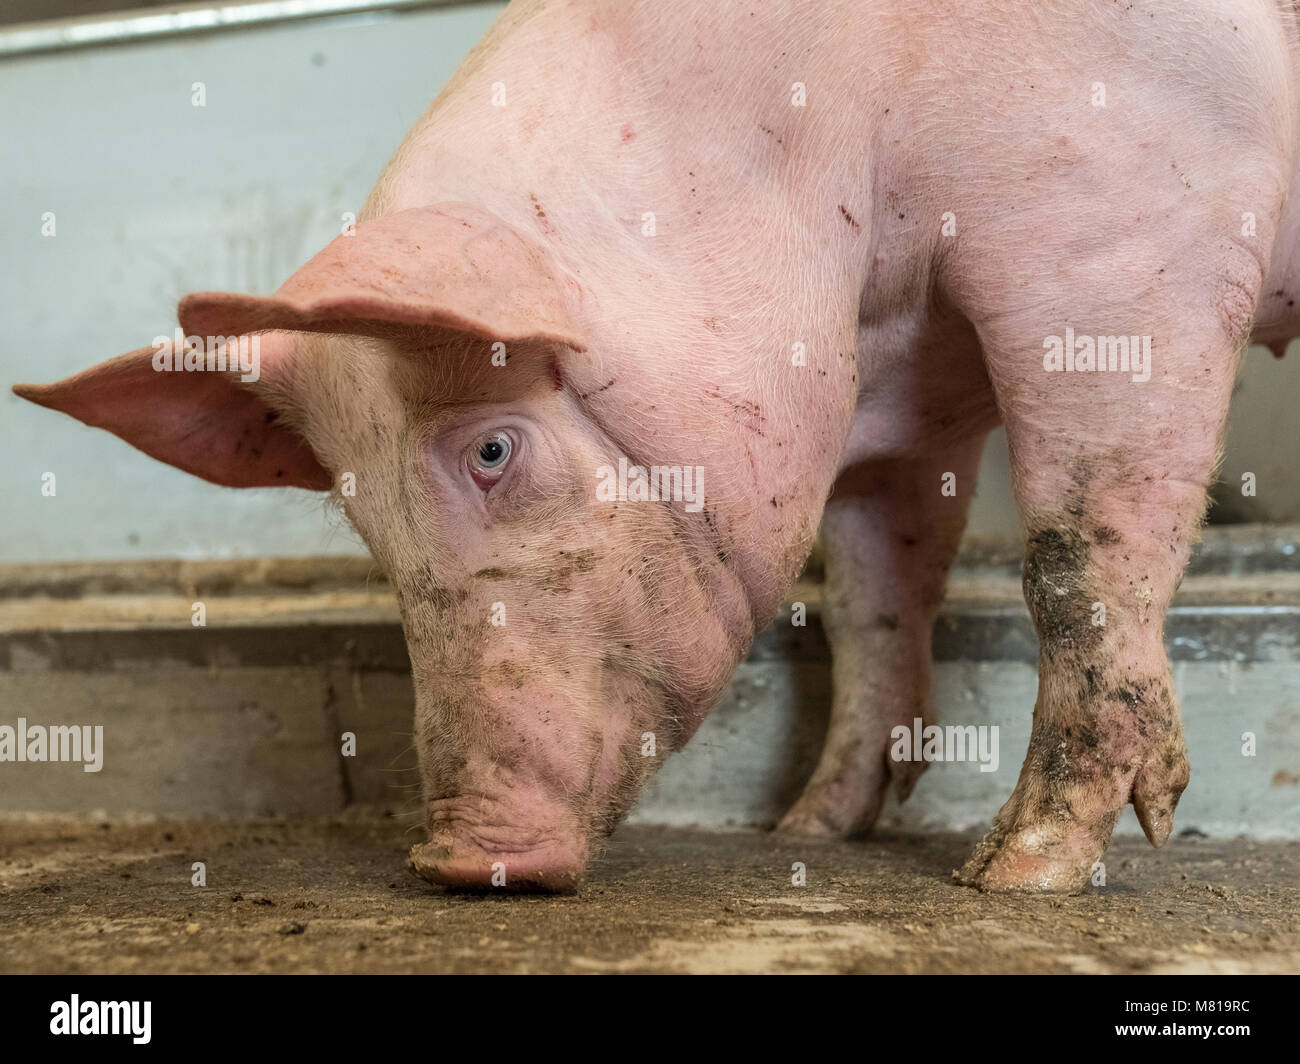 Fattening pig 26 Stock Photo